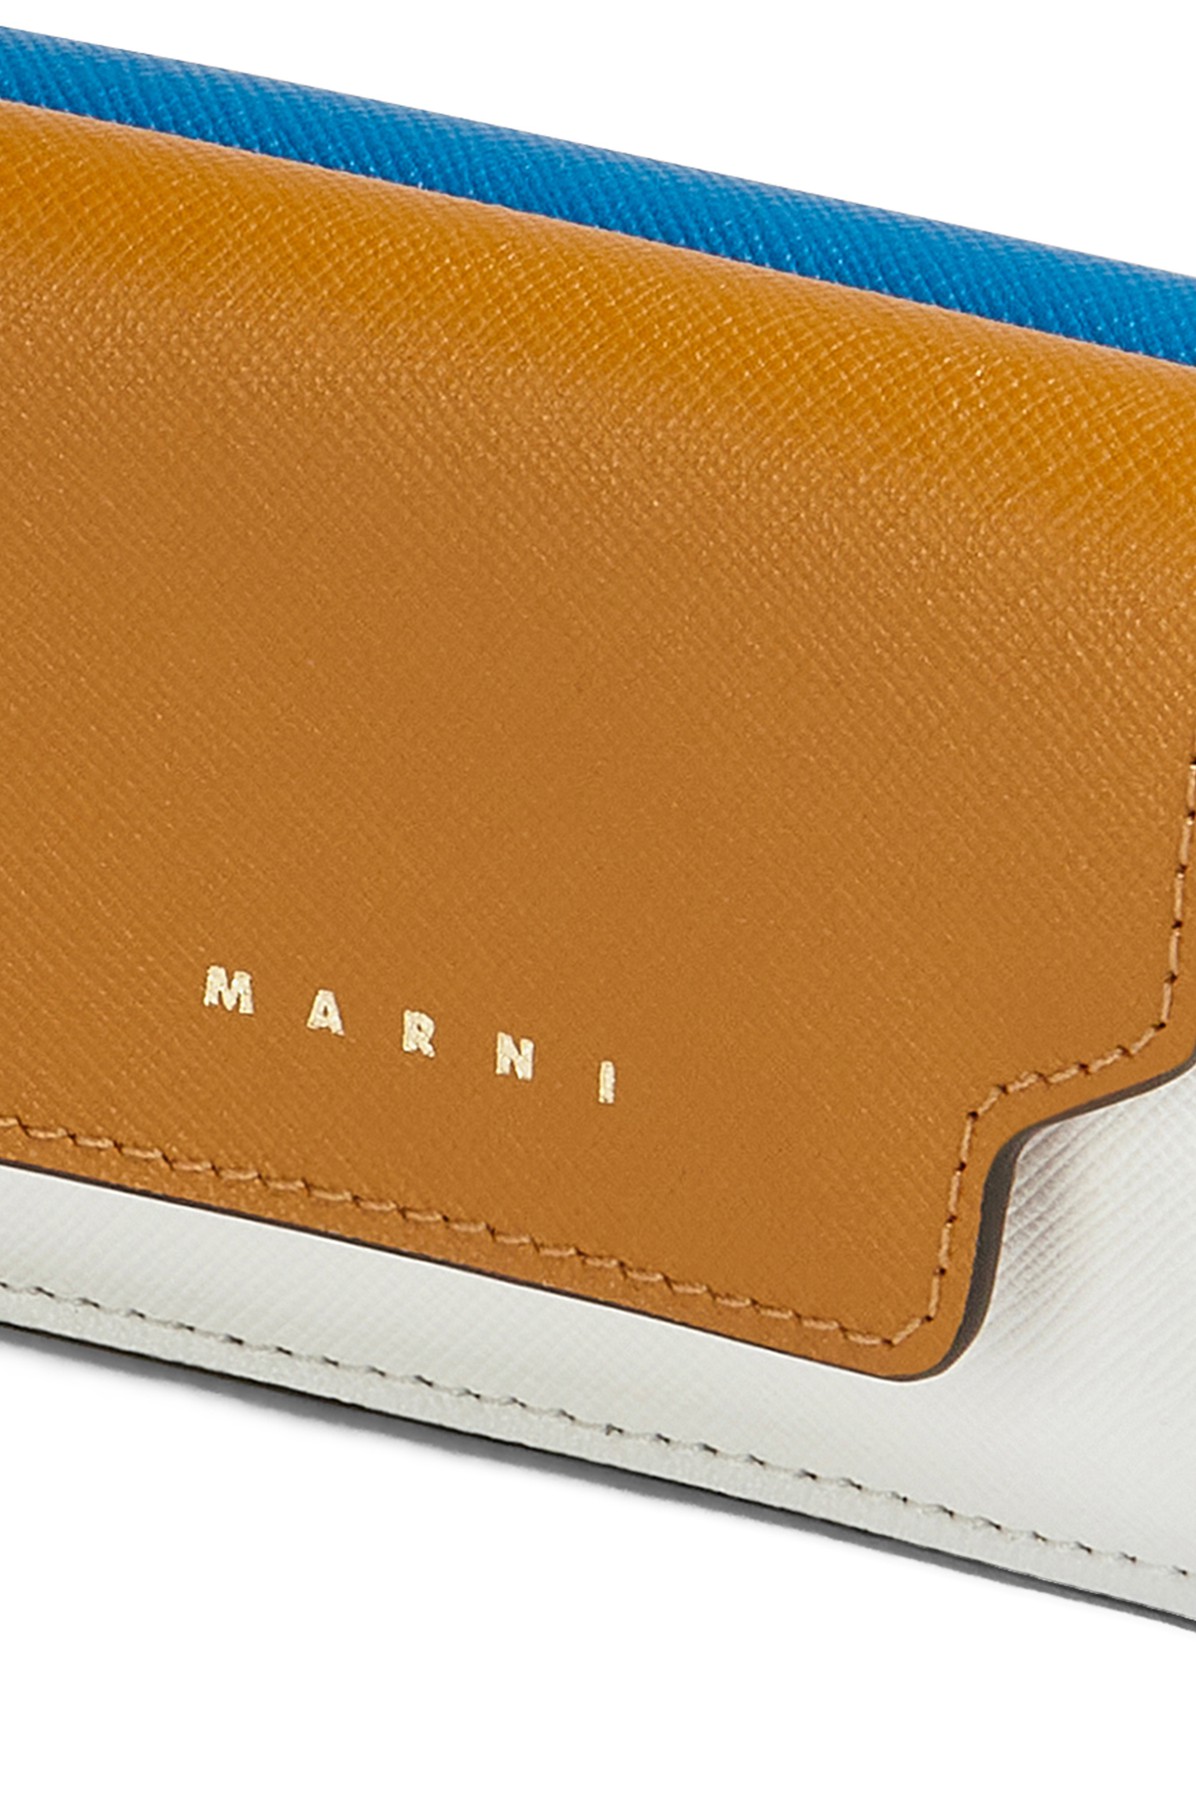 Marni Women's Tri-Fold Saffiano Leather Wallet